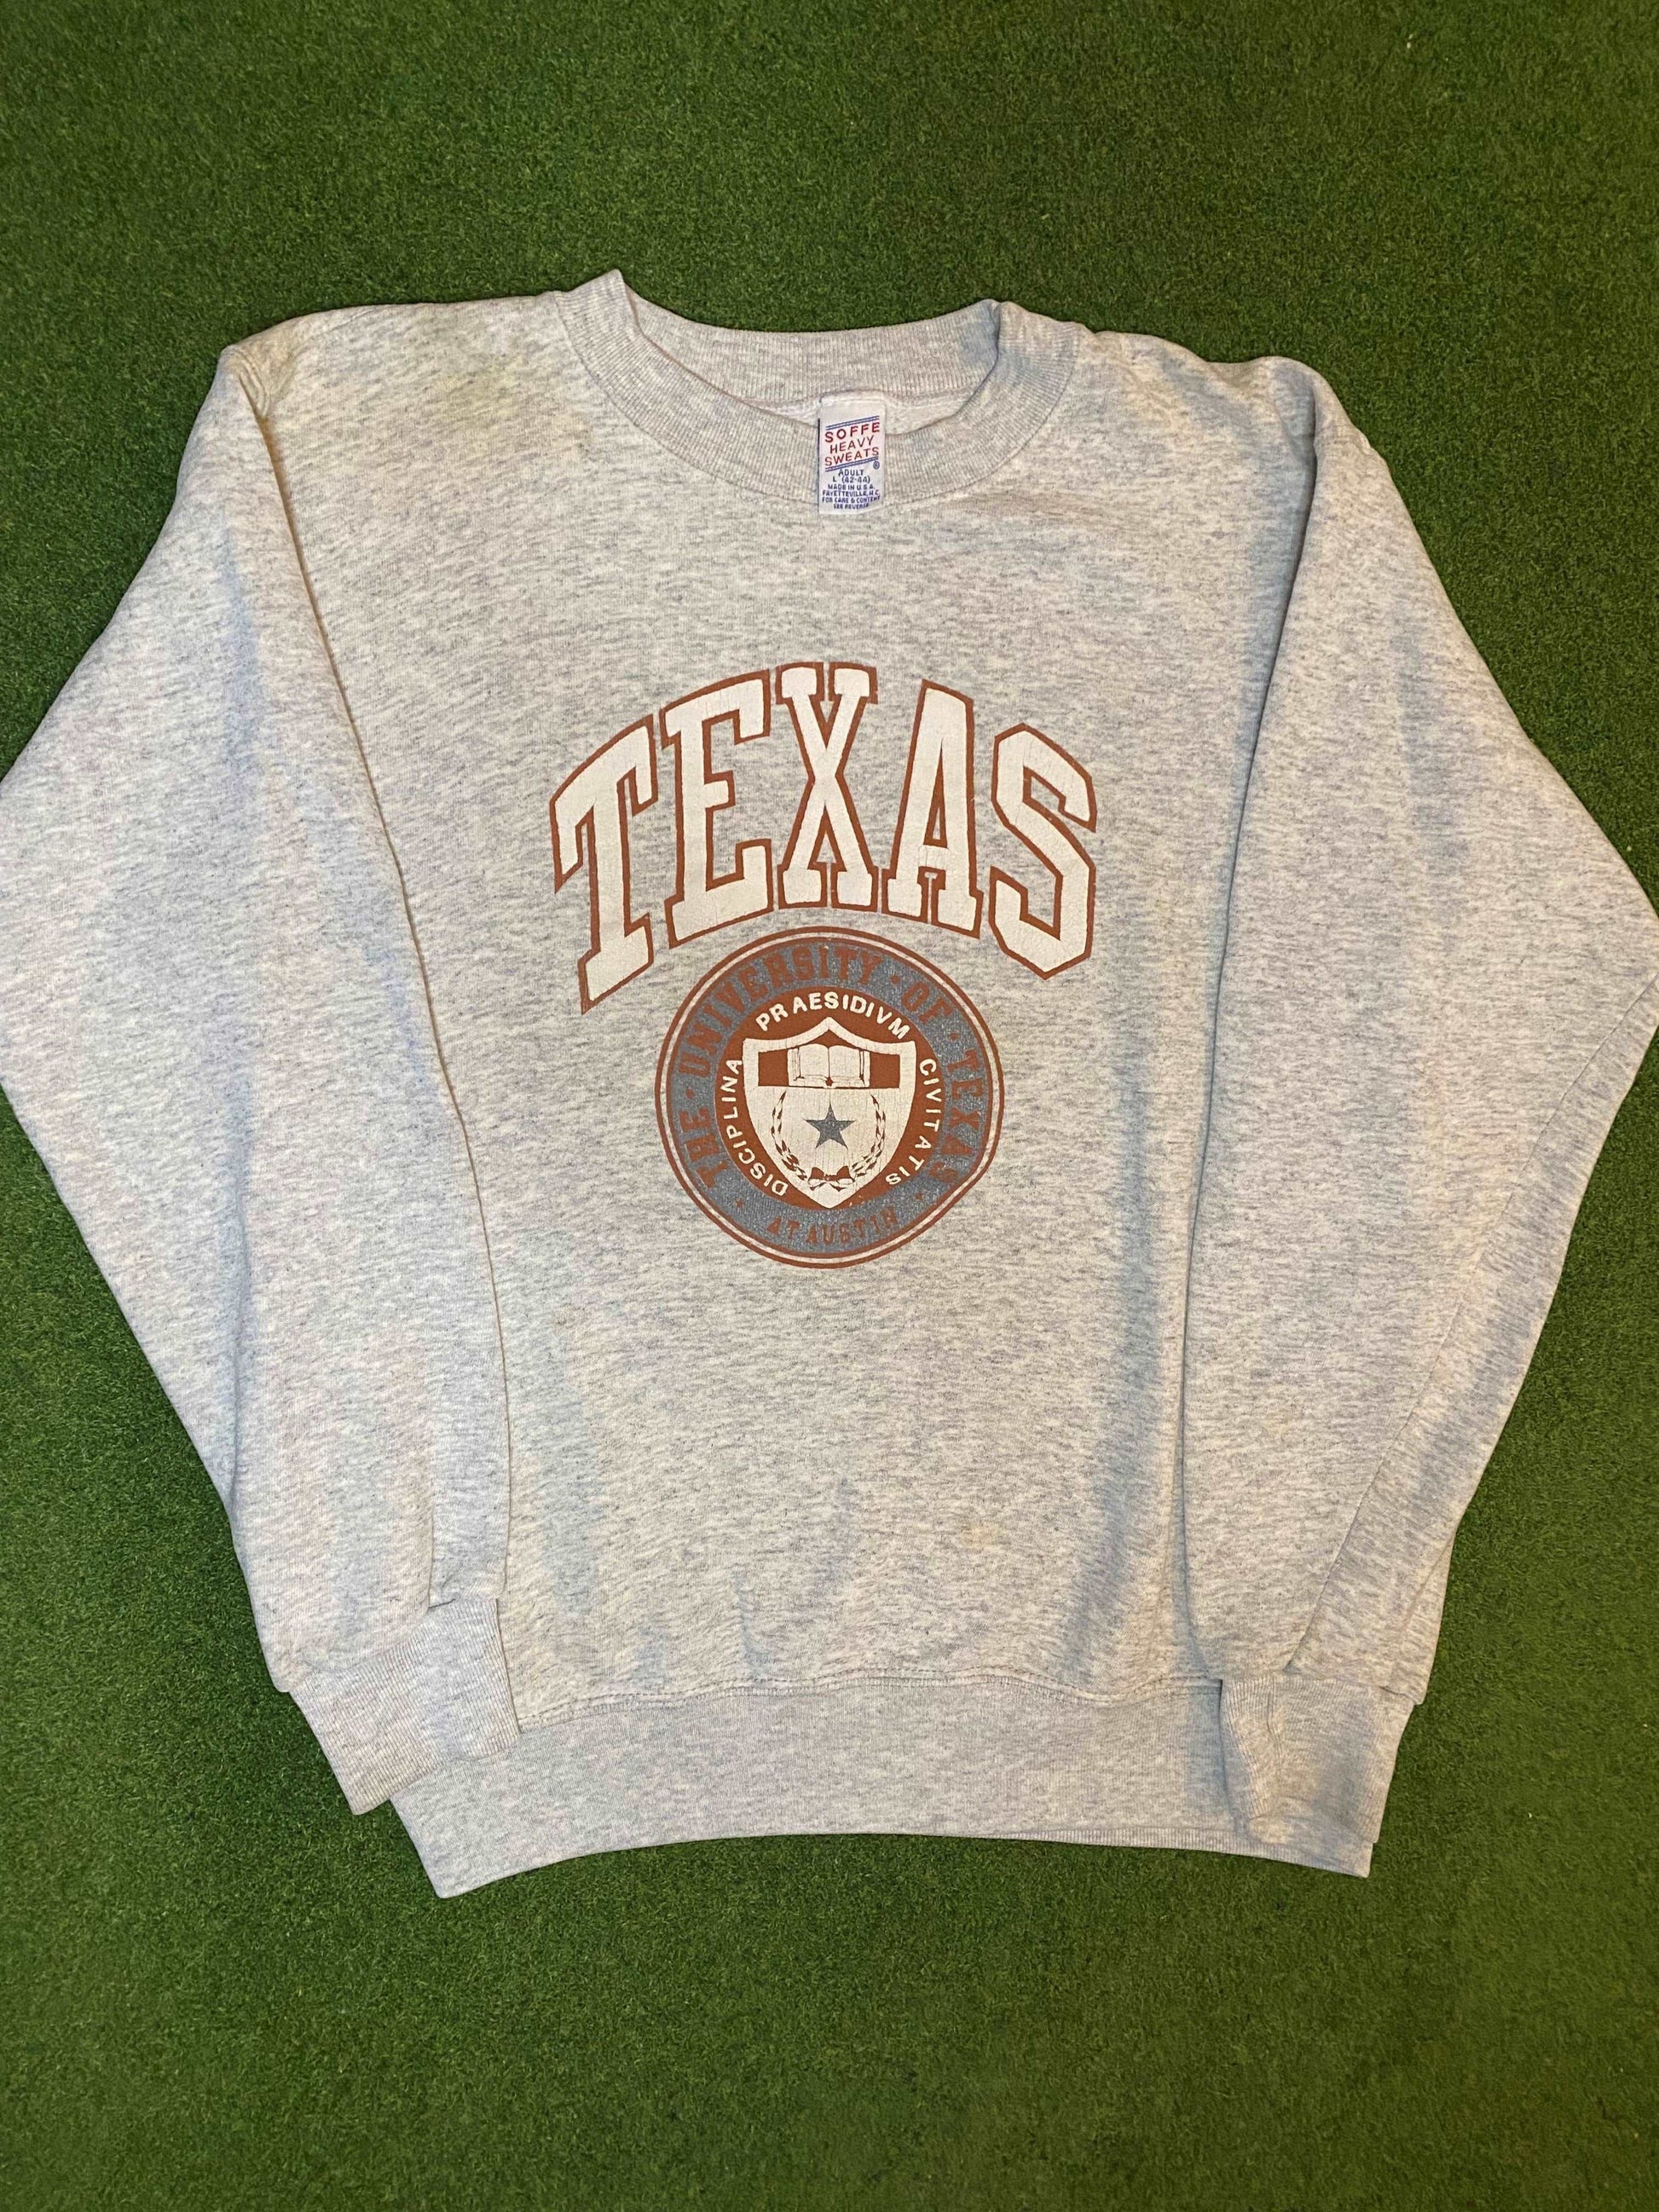 80s Texas Longhorns - Vintage University Crewneck Sweatshirt (Large)